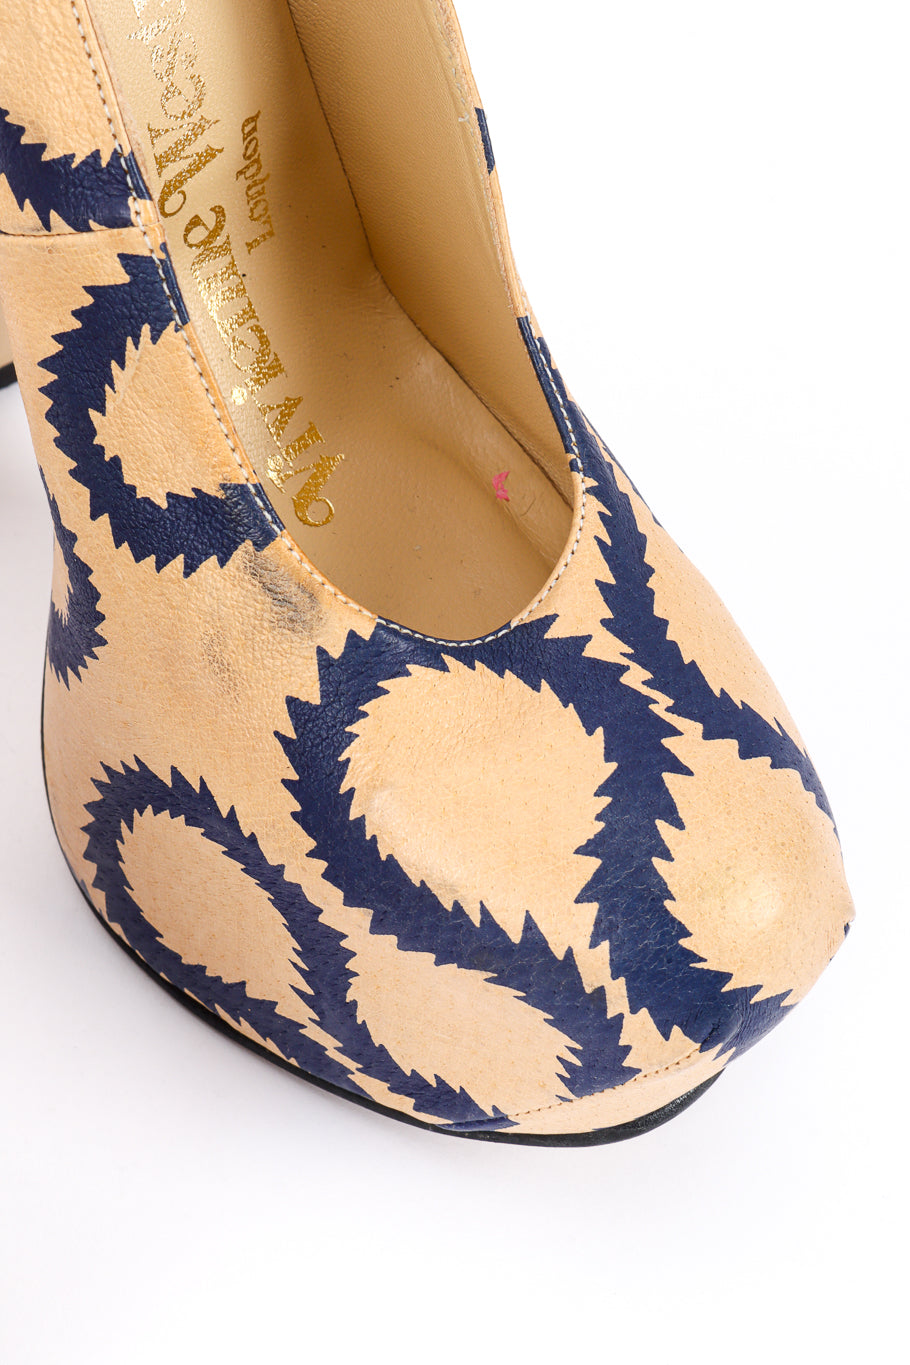 Vivienne Westwood 2013 F/W Squiggle Print Leather Court Shoe scuff inner left shoe @recessla